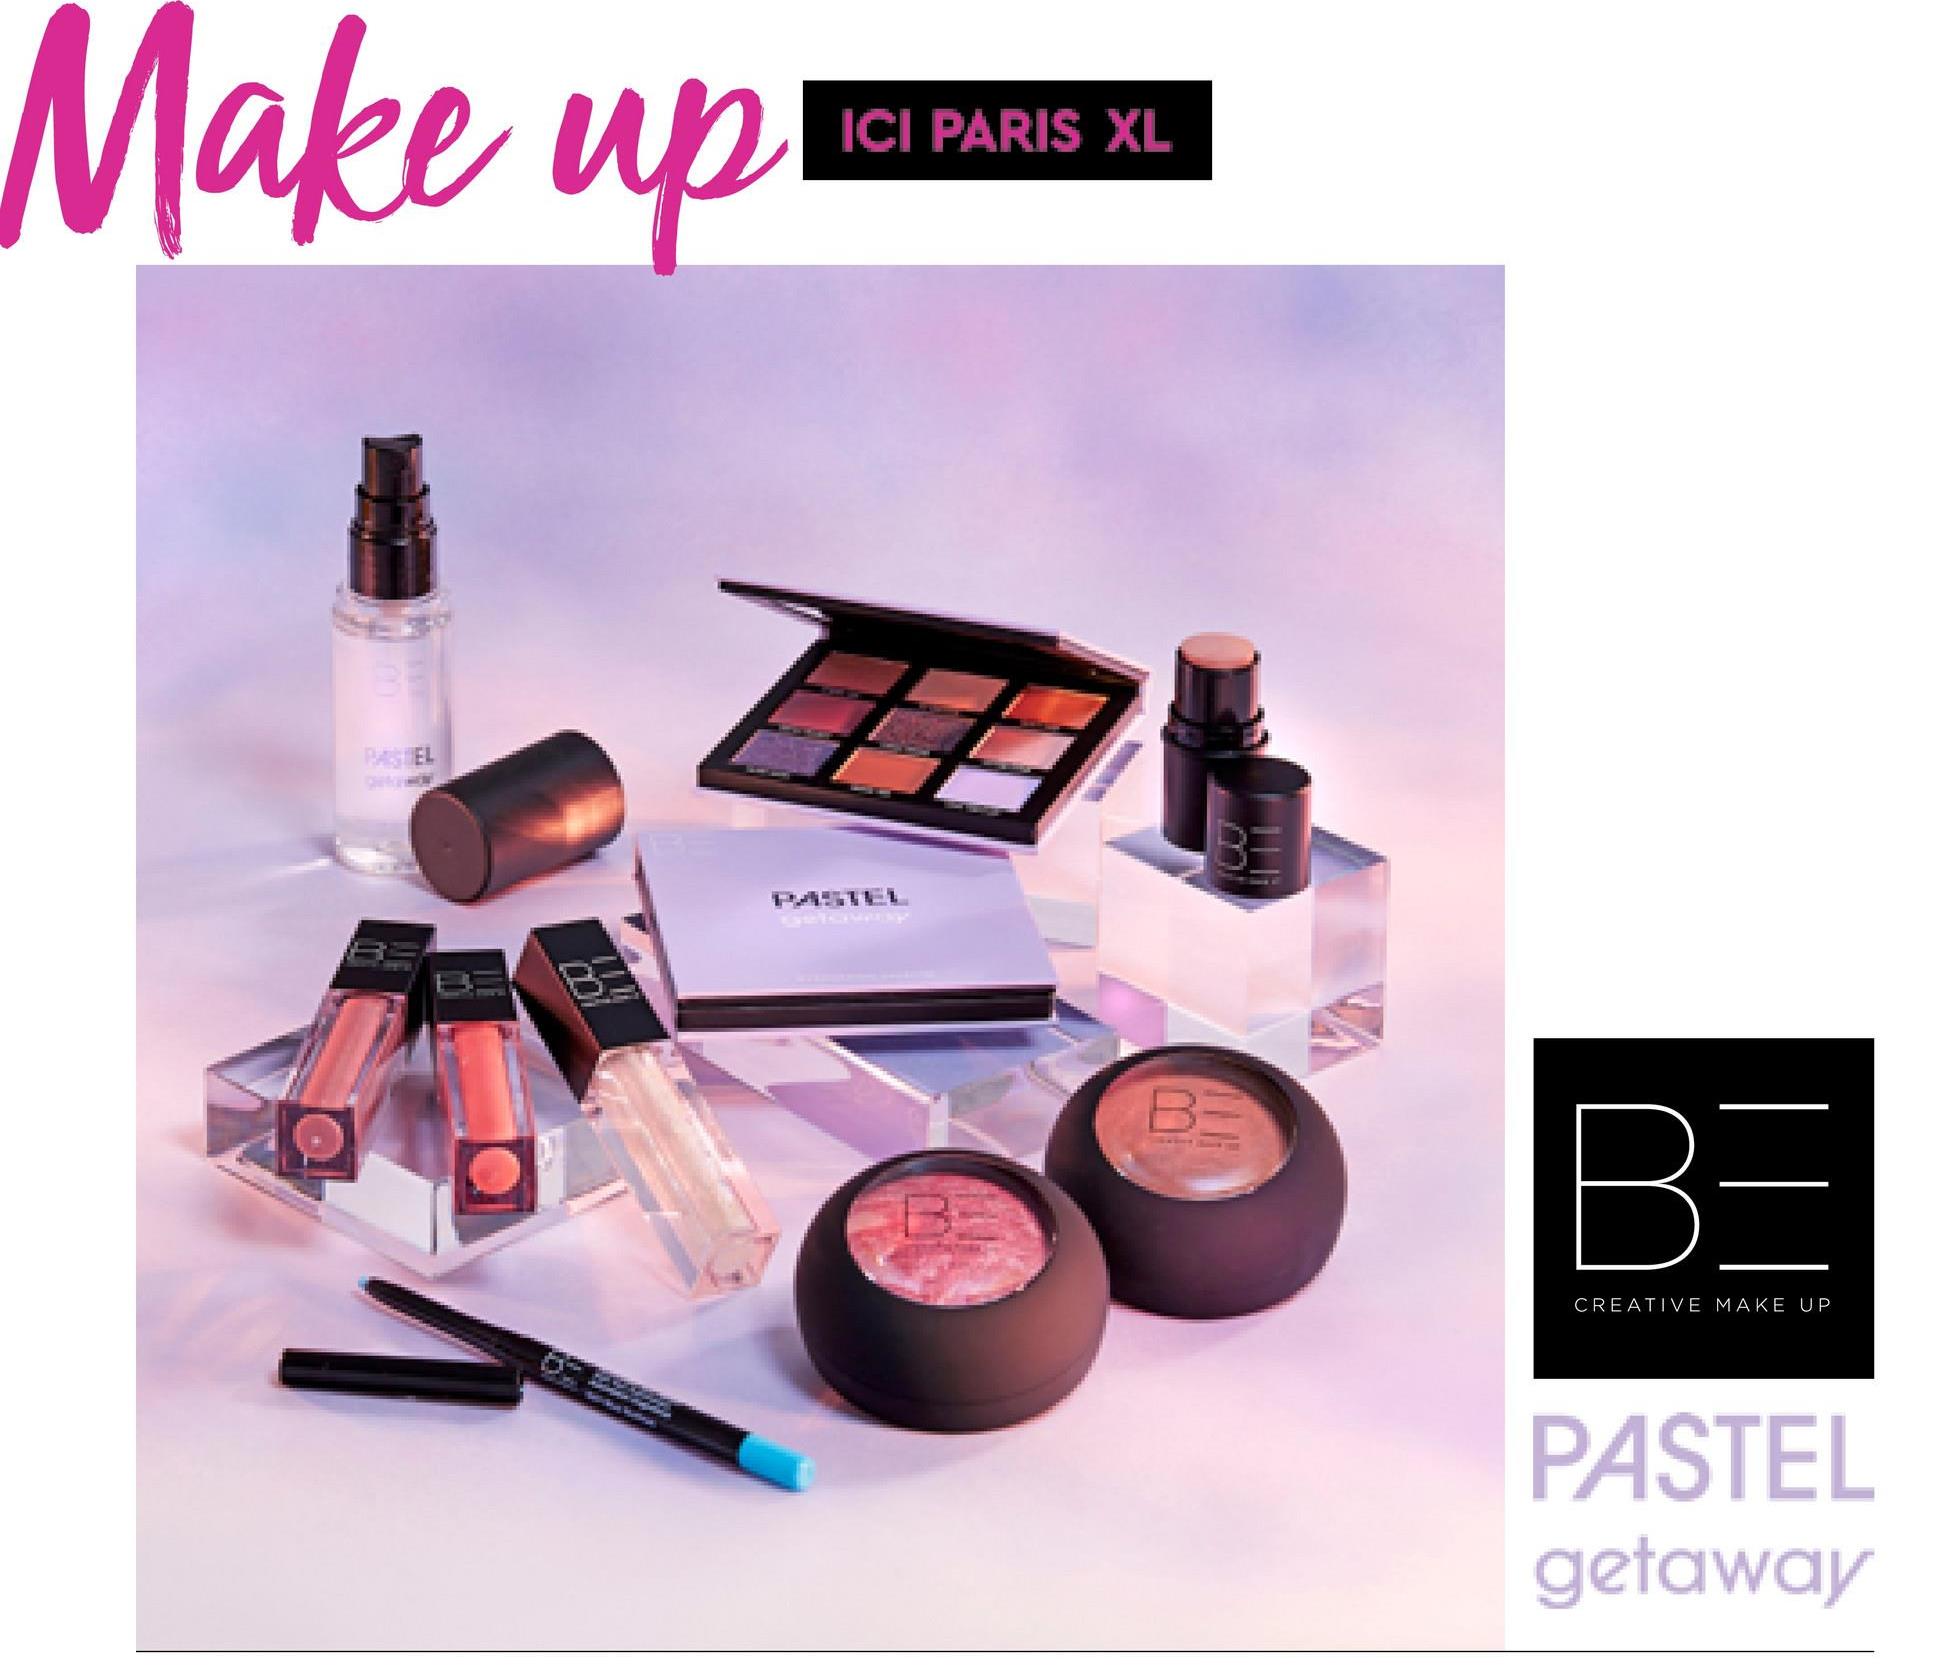 Make up
PASTEL
B²
CON
ICI PARIS XL
A
m
Saint Sa
BE
CREATIVE MAKE UP
PASTEL
getaway